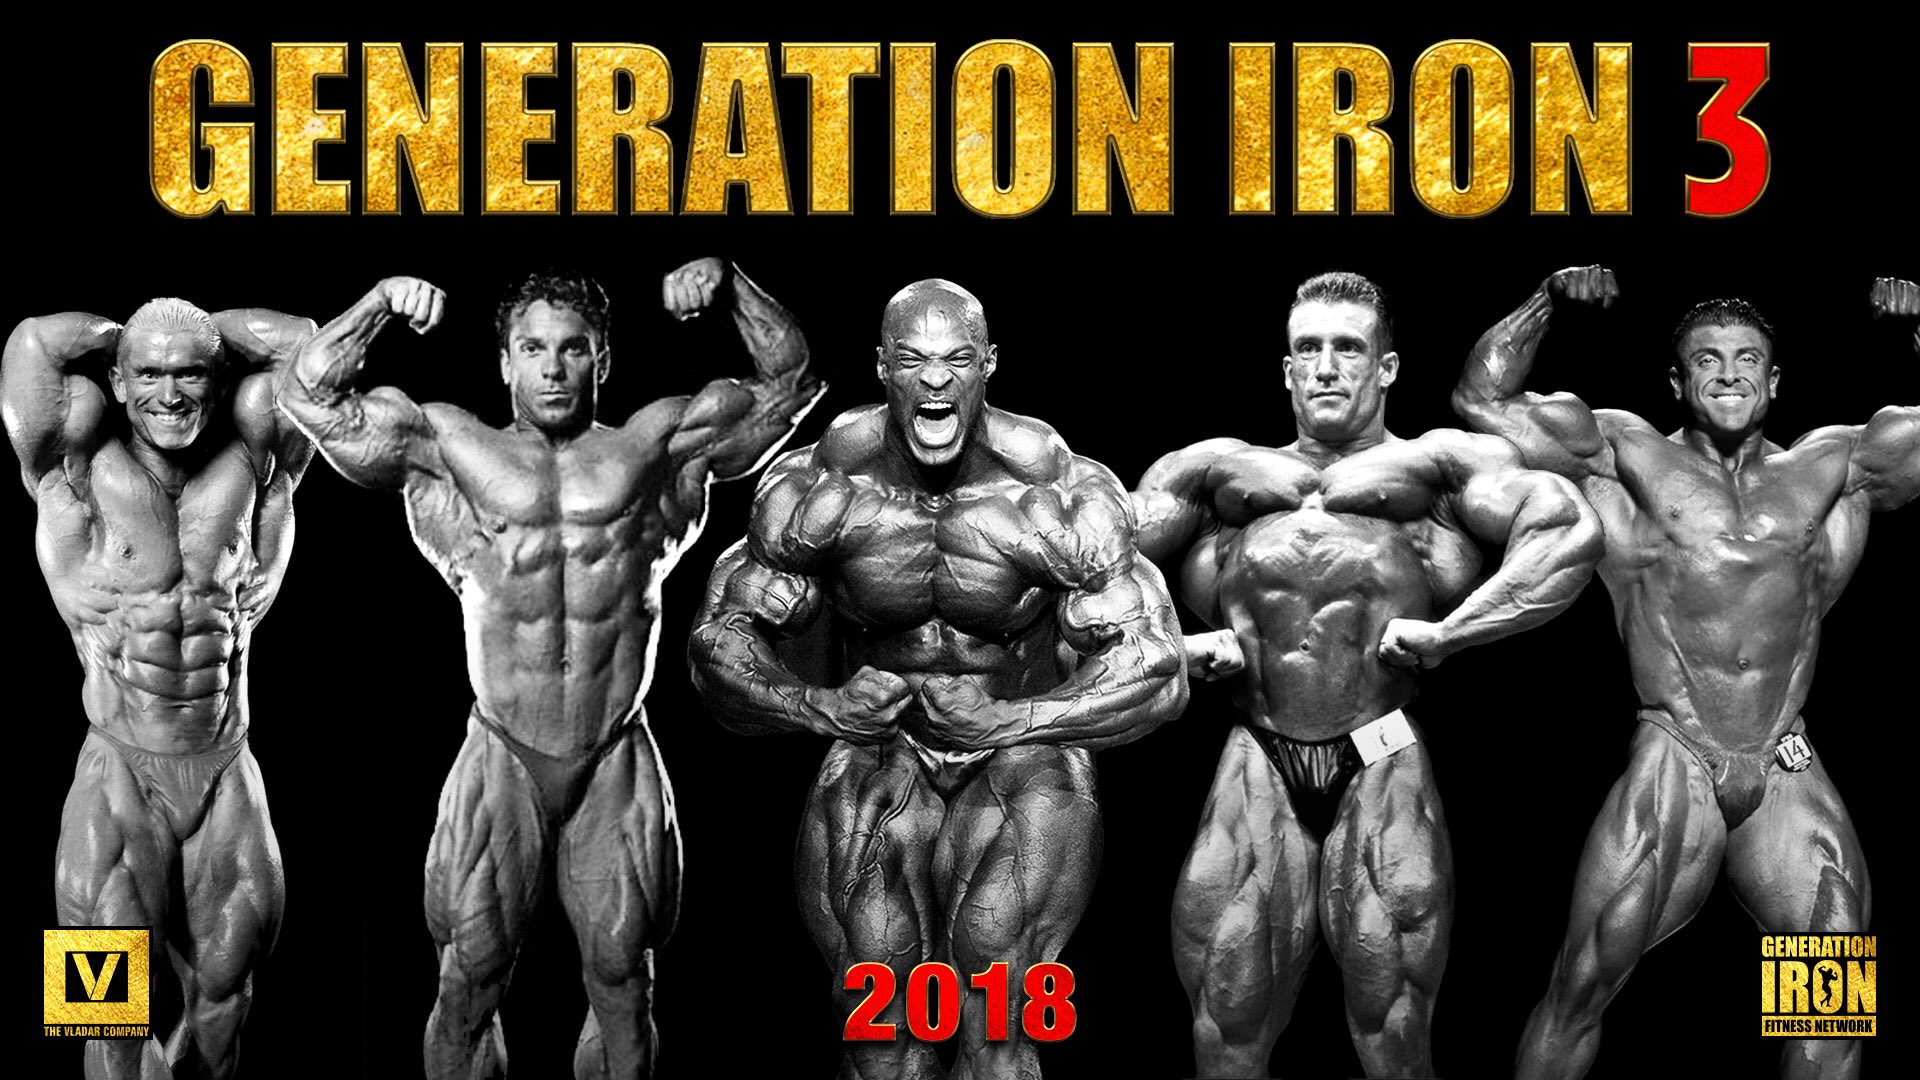 månedlige siv Indien GENERATION IRON on Twitter: "Generation Iron 3 🎬 B READY  https://t.co/KTd4IJTVtB" / Twitter